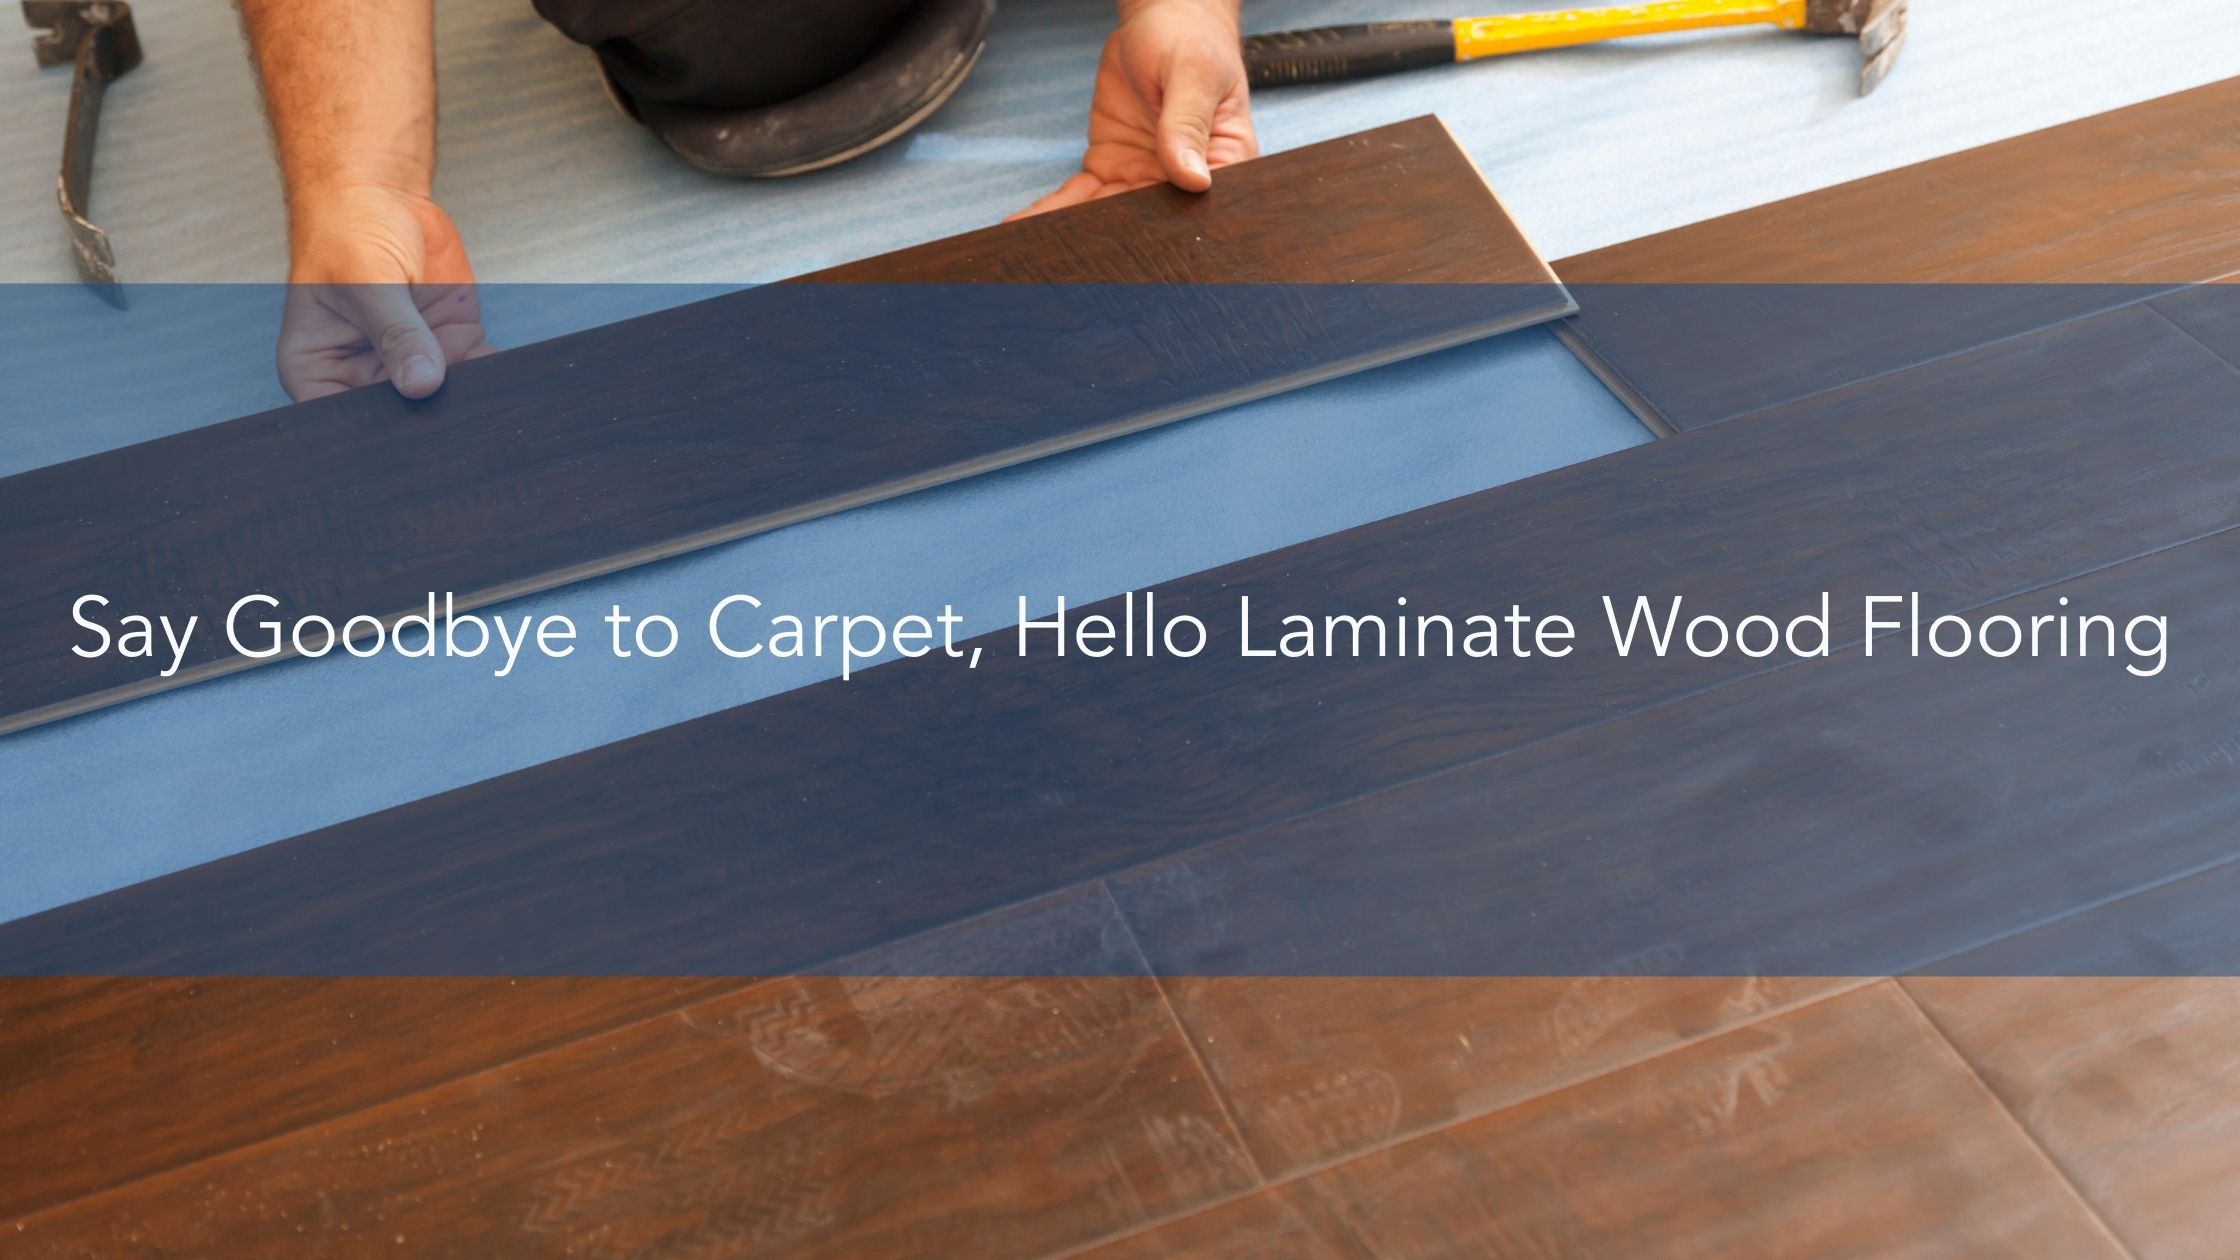 https://www.handymanconnection.net/wp-content/uploads/2022/01/Say-Goodbye-to-Carpet-Hello-Laminate-Wood-Flooring.jpg